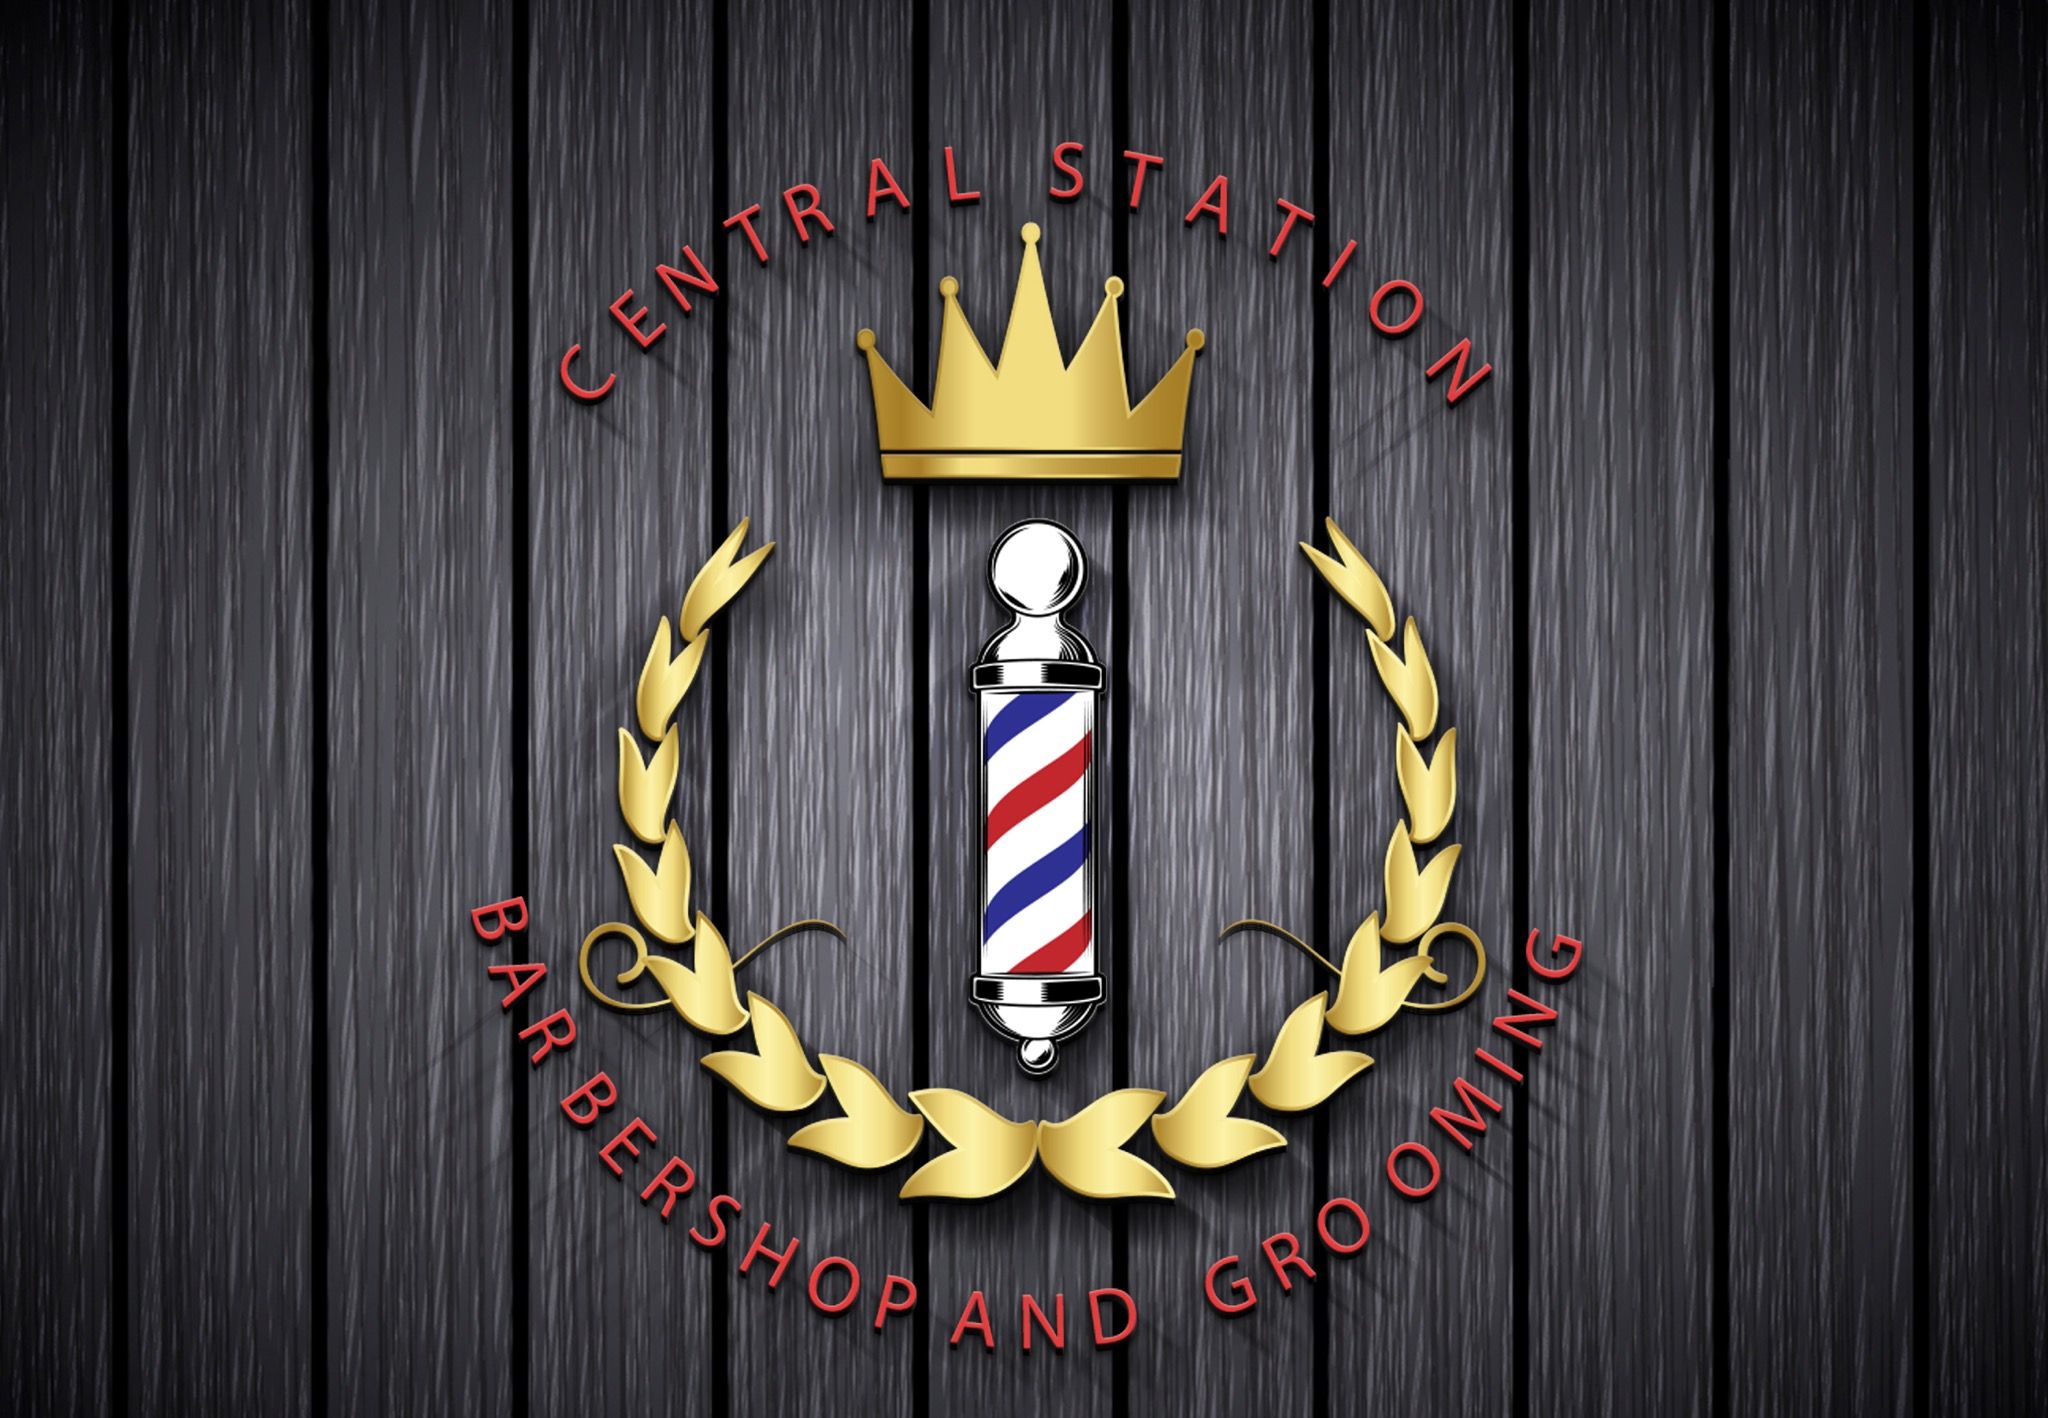 Central Station Barbershop & Grooming, 2325 Central Ave, St Petersburg, 33713